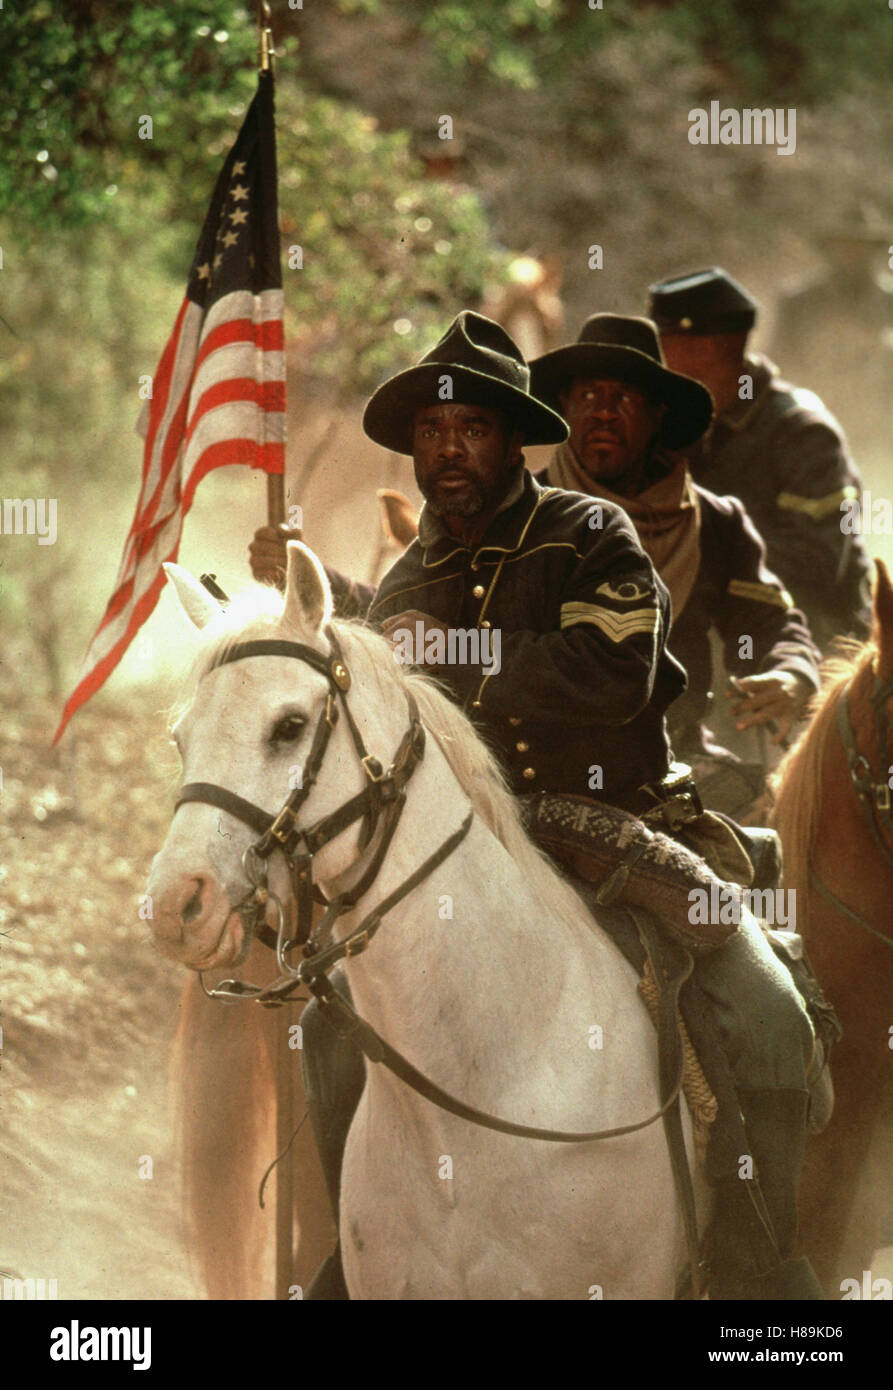 Soldati di Buffalo, (Buffalo soldati) USA 1997, Regie: Charles Haid, Danny Glover, Stichwort: uniforme, Fahne, Pferde Foto Stock